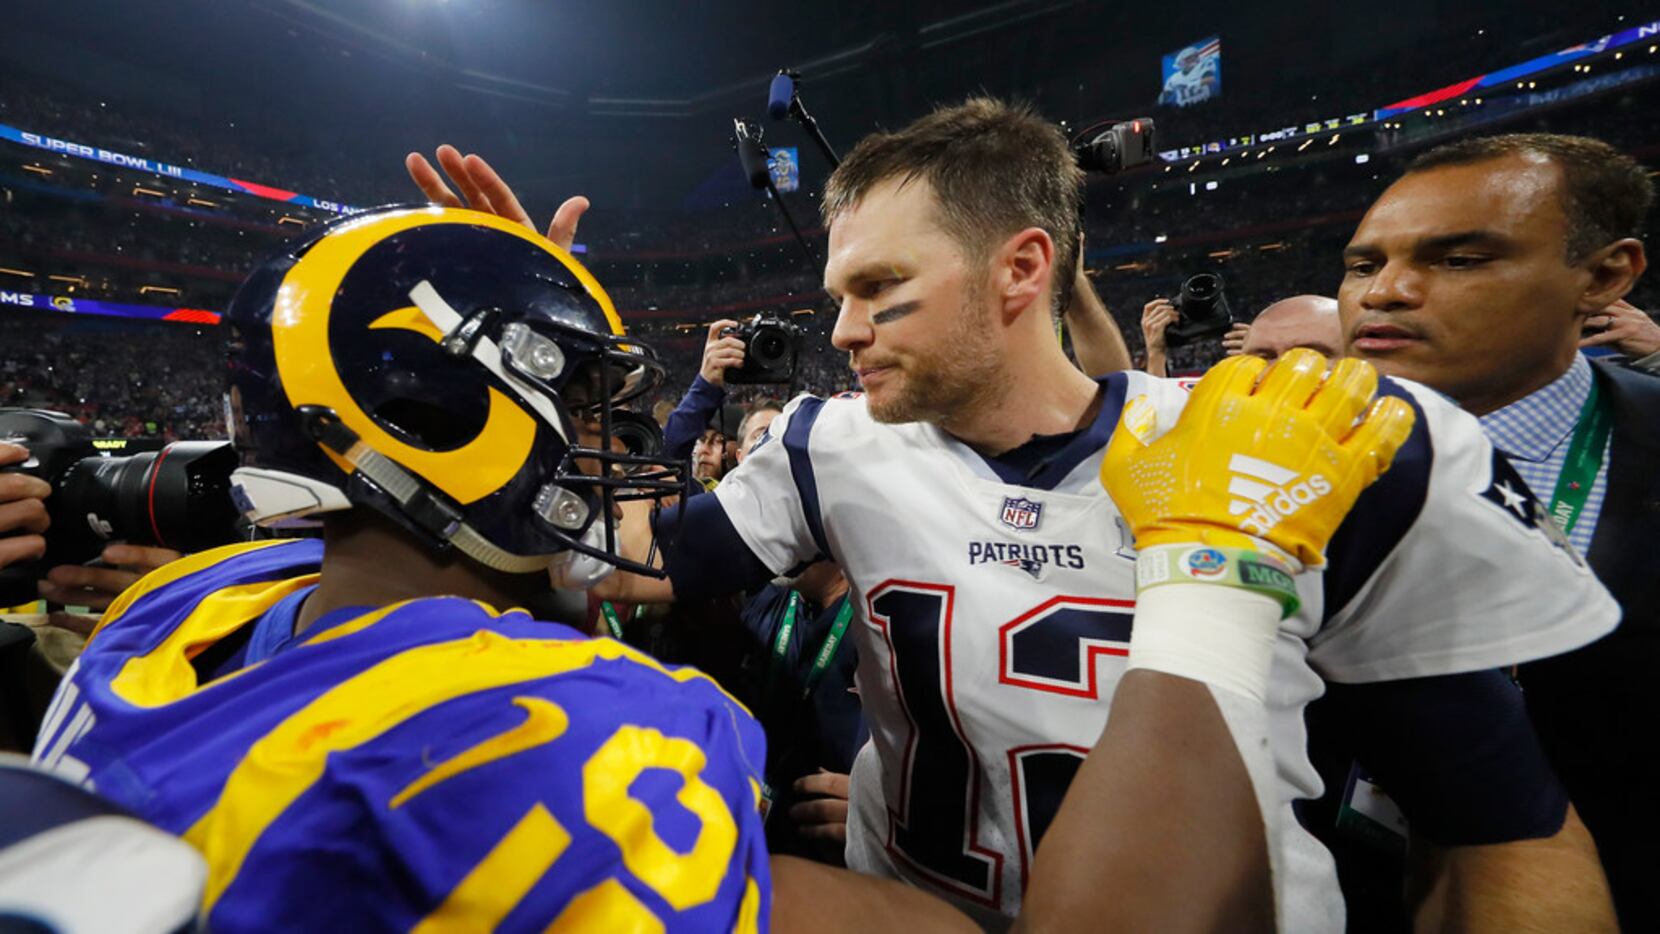 Patriots beat Rams in lowest scoring Super Bowl ever, 13-3